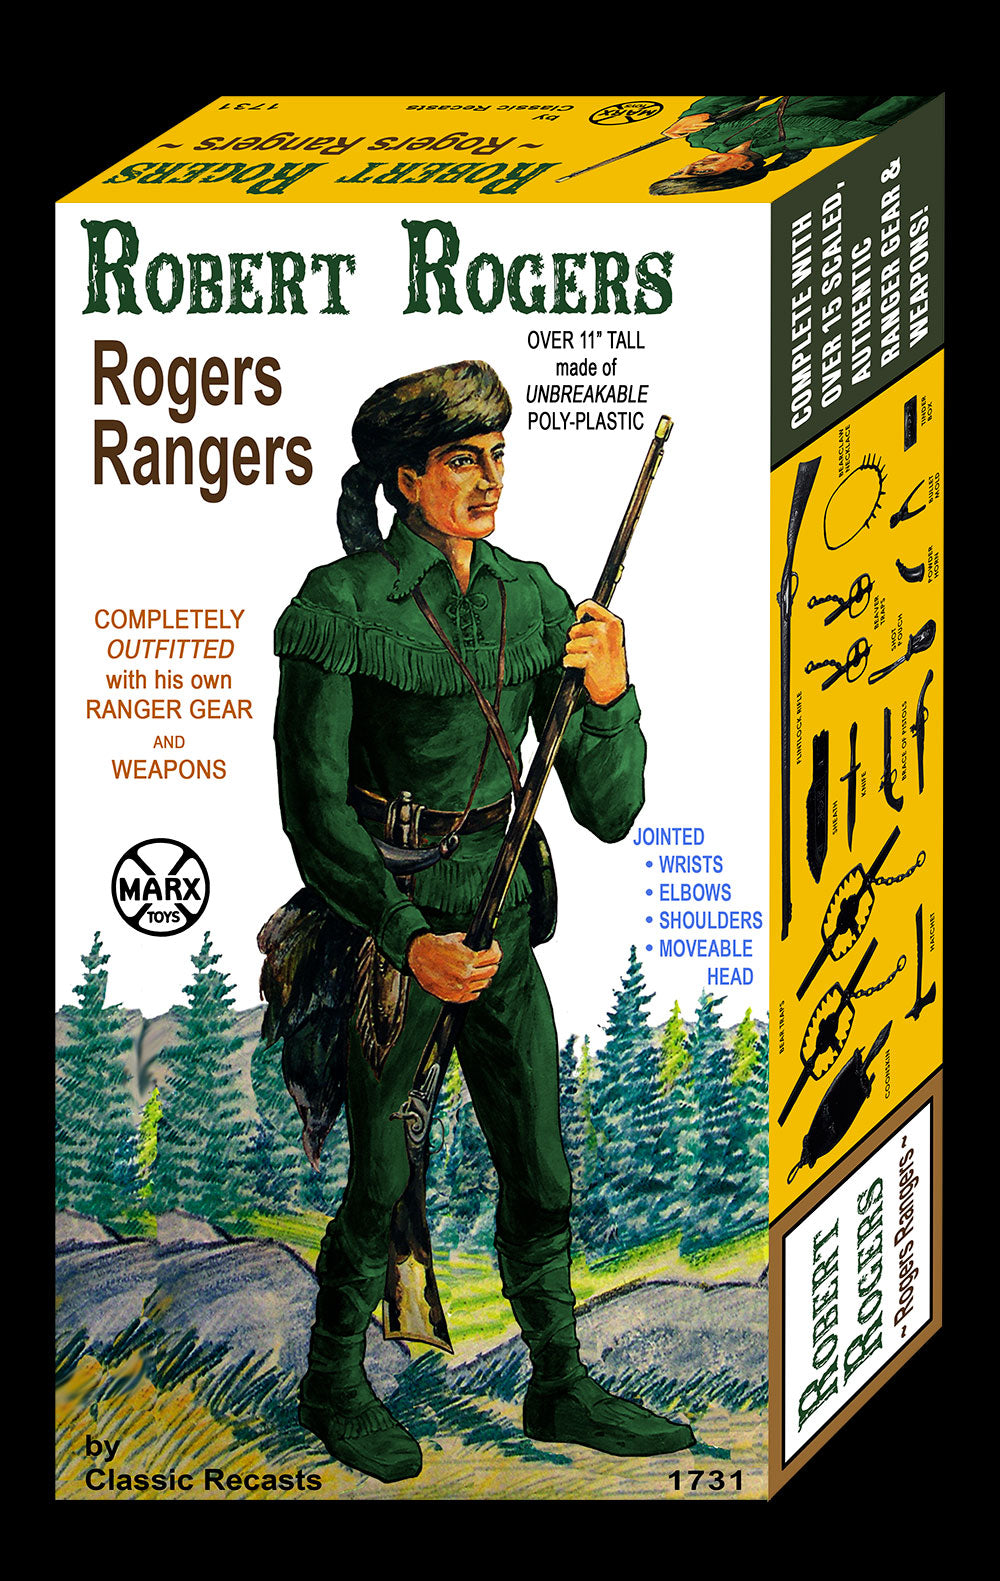 Robert Rogers Fantasy Box and Manual